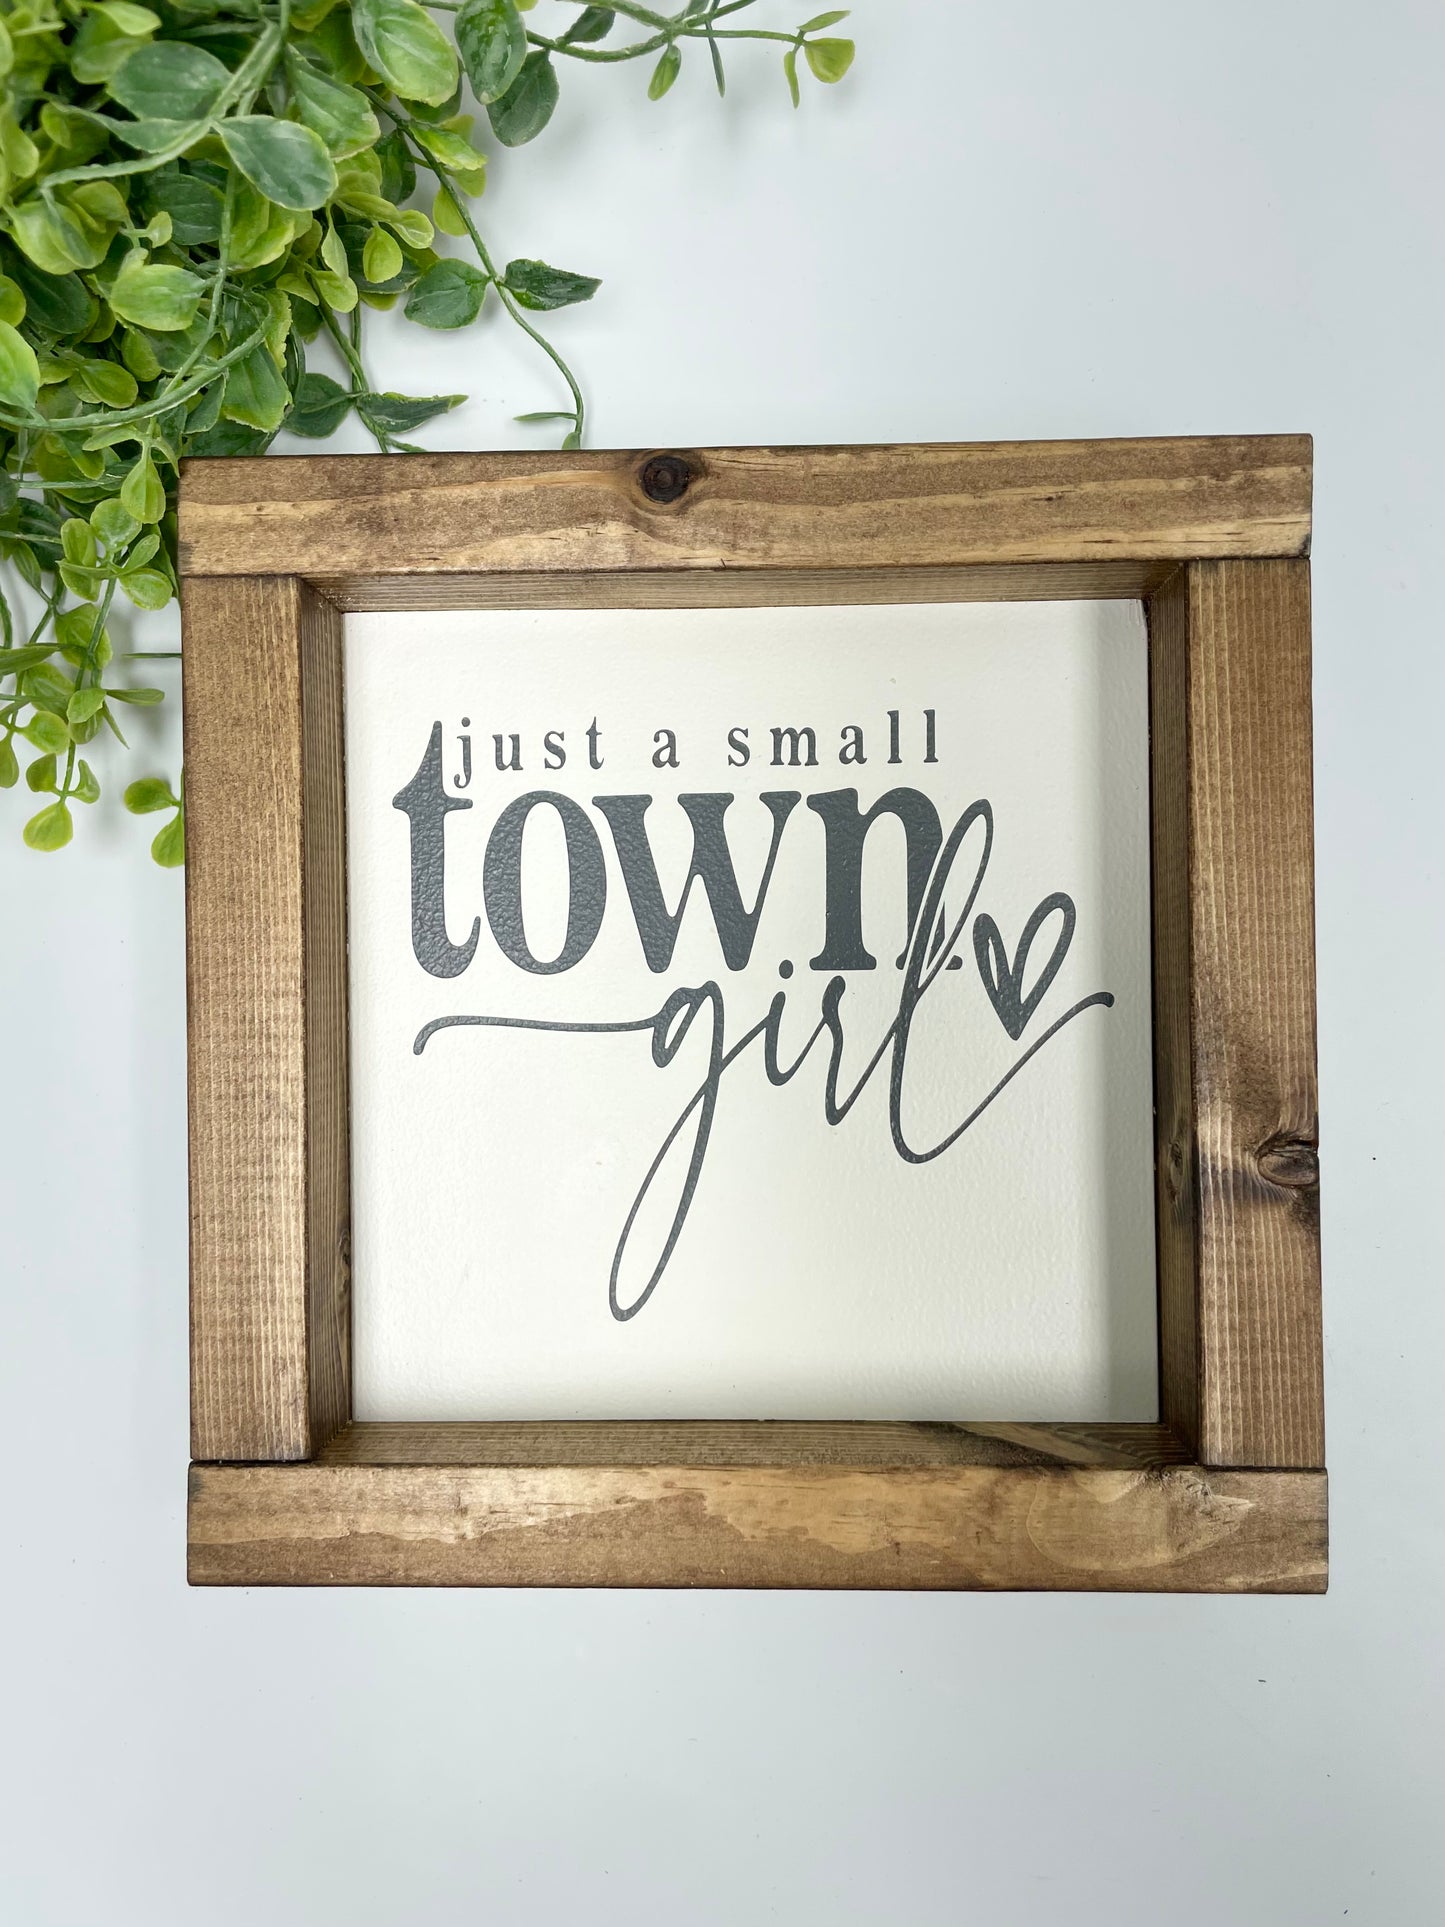 Handmade Sign - Small Town Girl 2.0